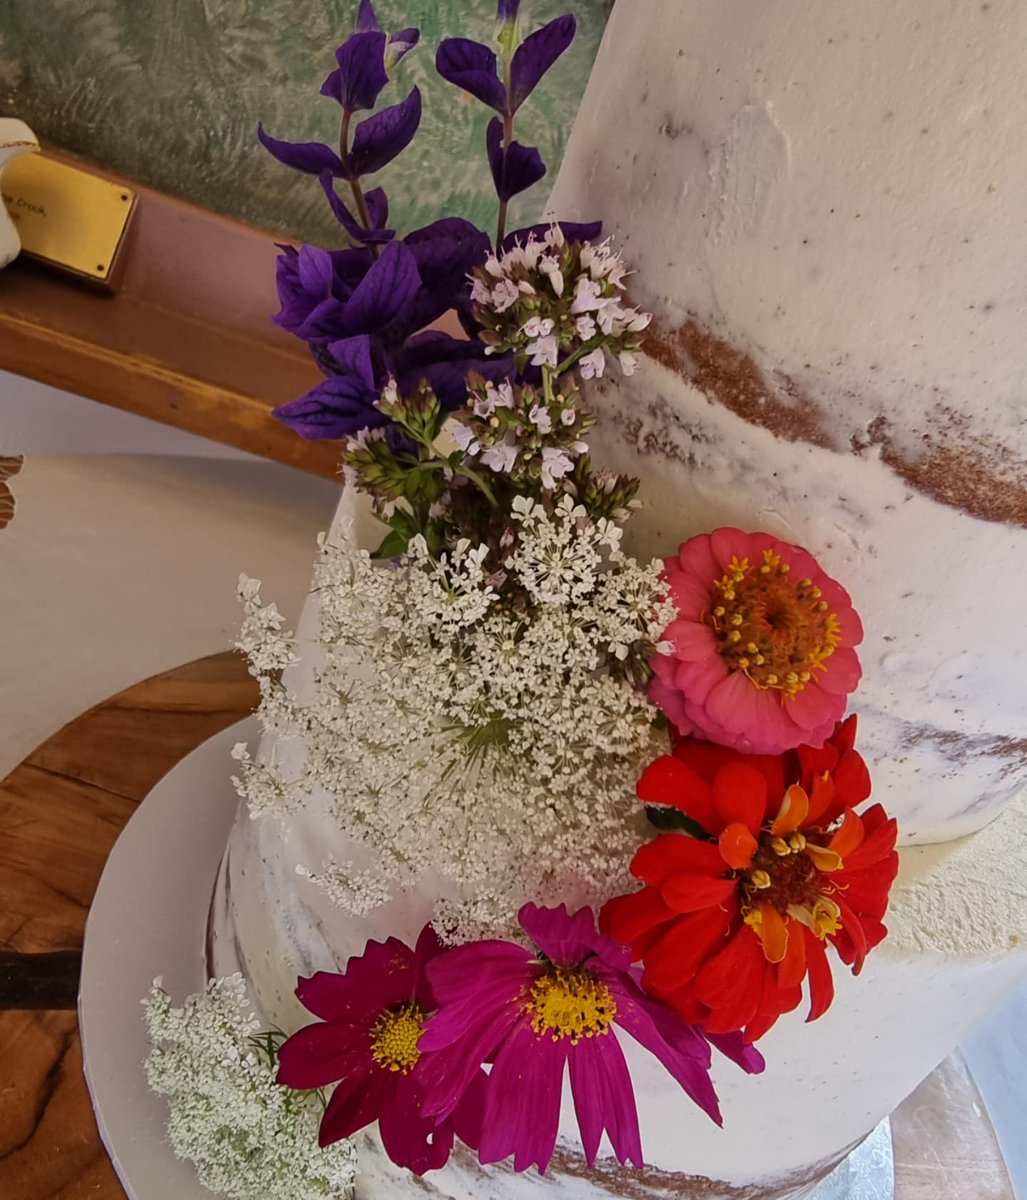 Semi-naked wedding cake (vanilla and lemon) with wild flowers

#AuntieCakeBakes #WeddingCake #seminakedcake #wildflowers #celebrationcake #seminakedweddingcake #essexbaker #eastlondonbaker